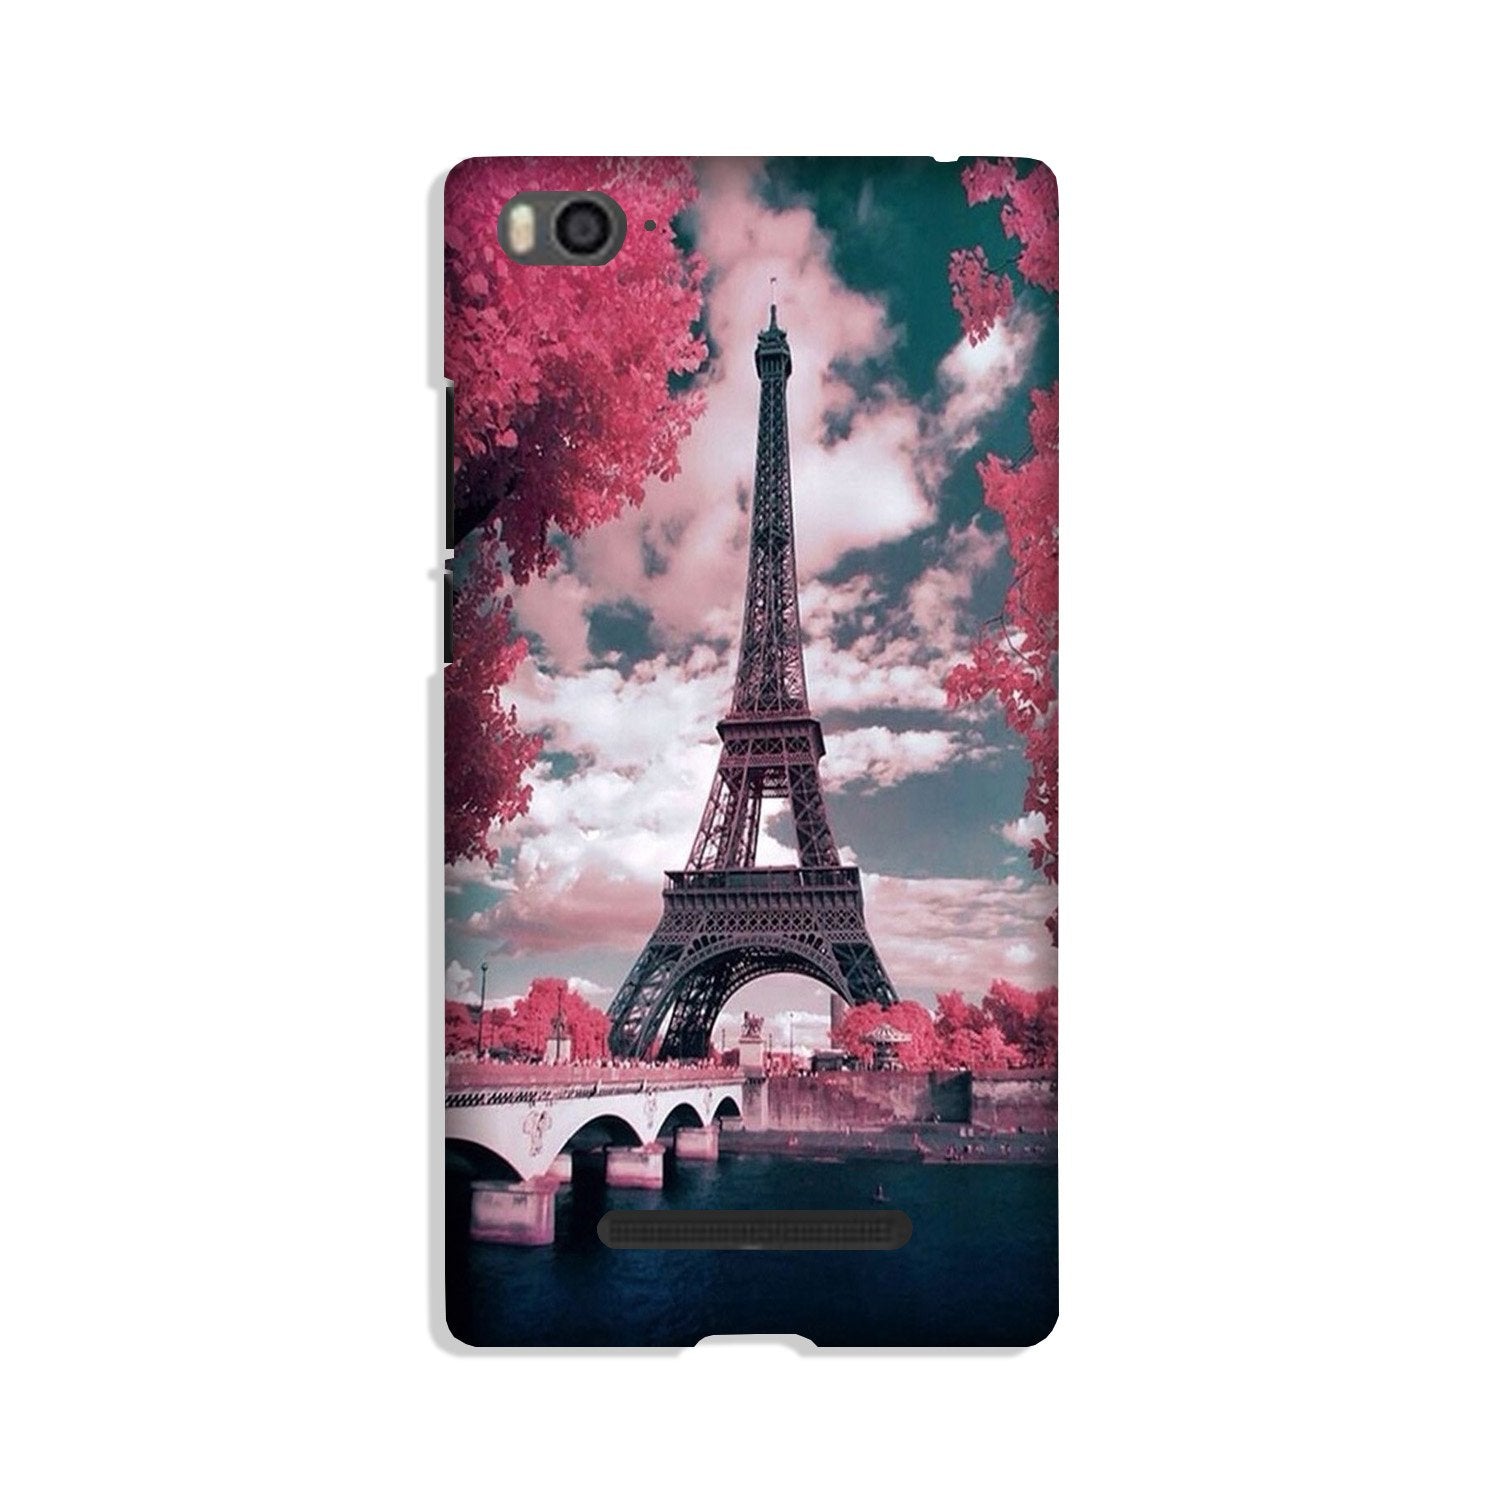 Eiffel Tower Case for Xiaomi Mi 4i  (Design - 101)